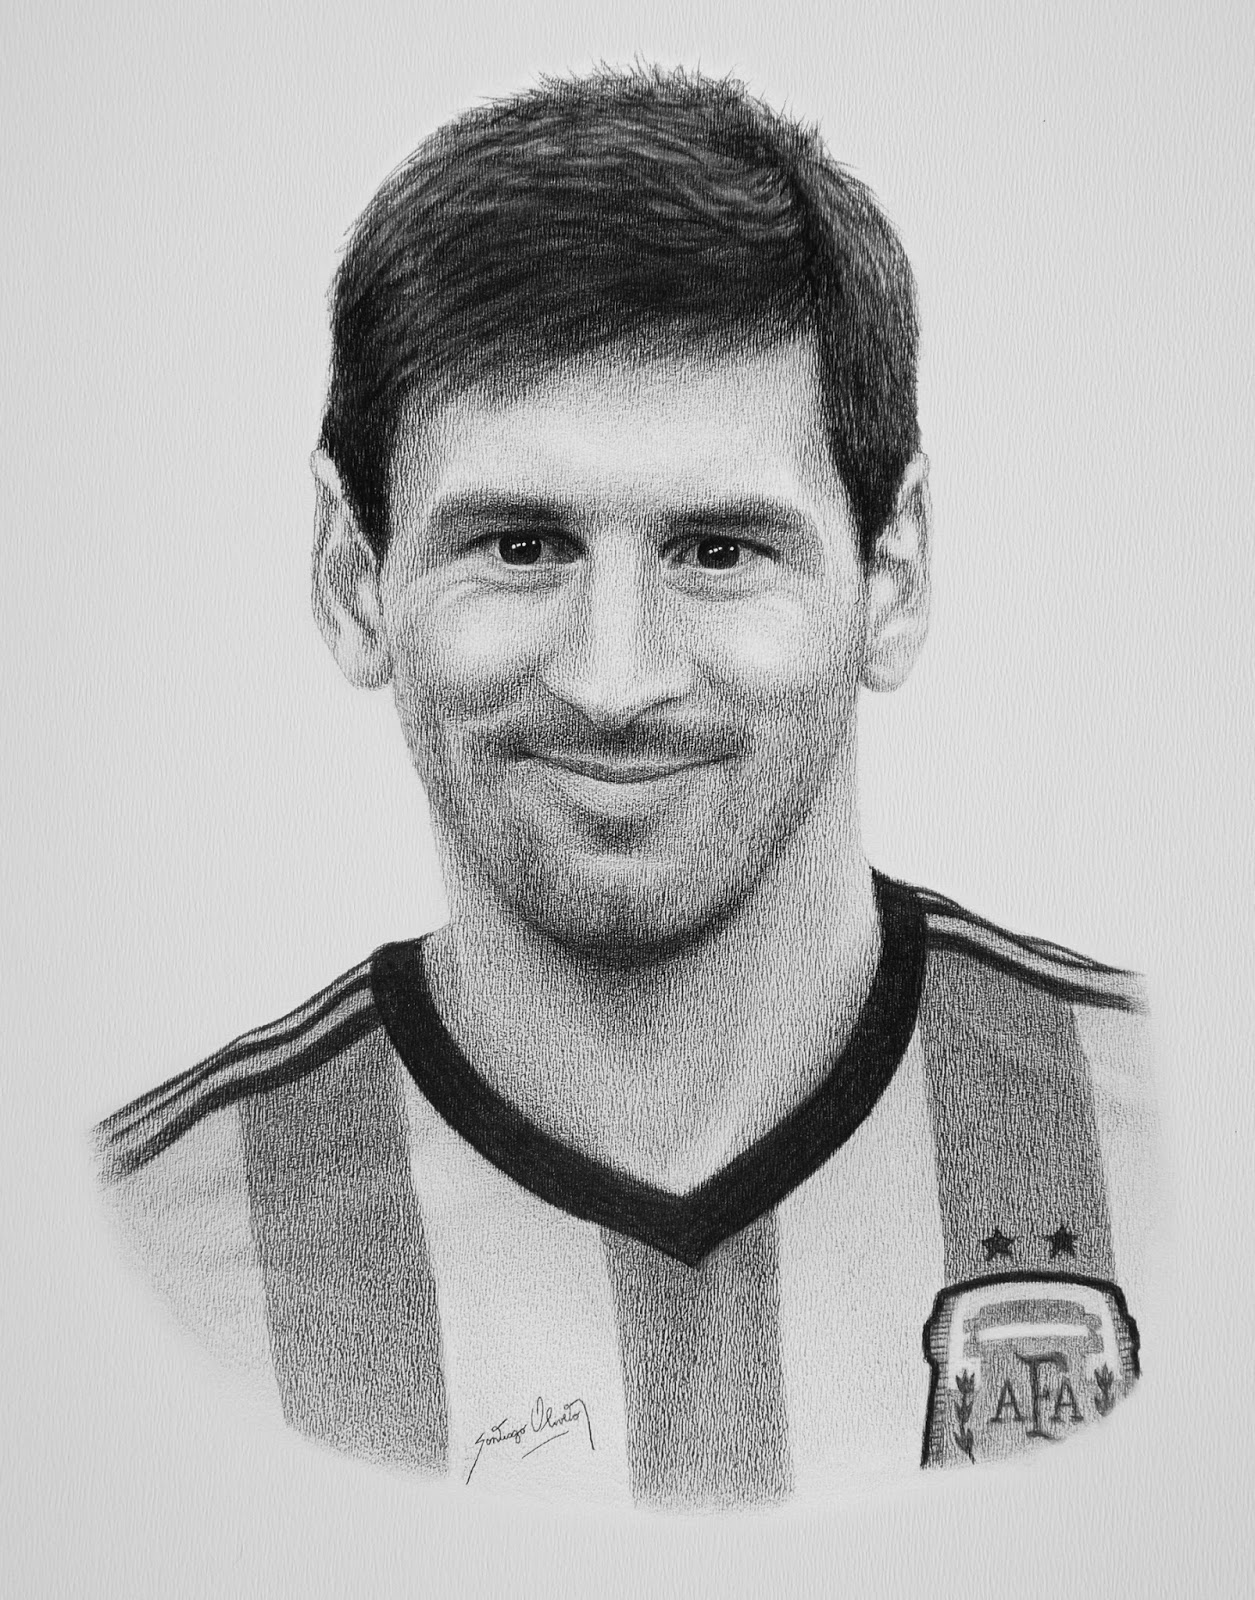 Santiago Oliveto: Retrato a lápiz de Lionel Messi